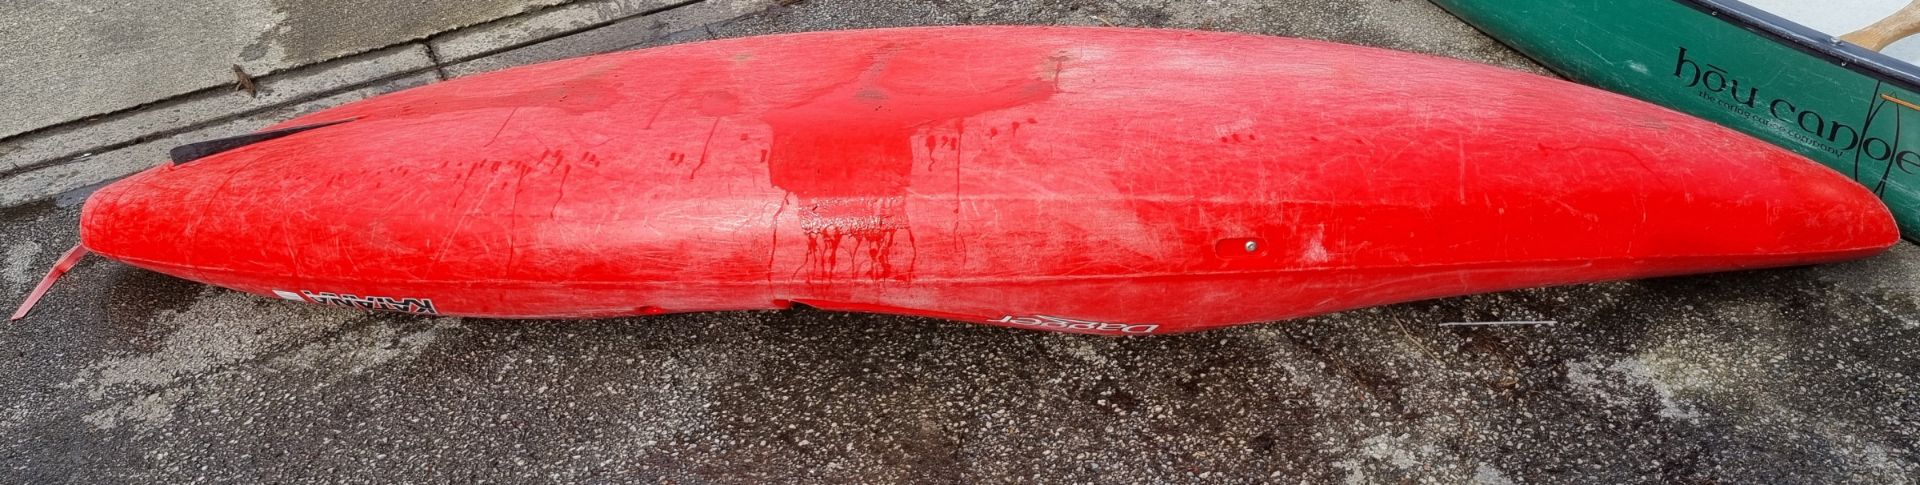 Dagger Katana polyethylene kayak - red - W 3200 x D 660 x H 420mm - Image 5 of 7